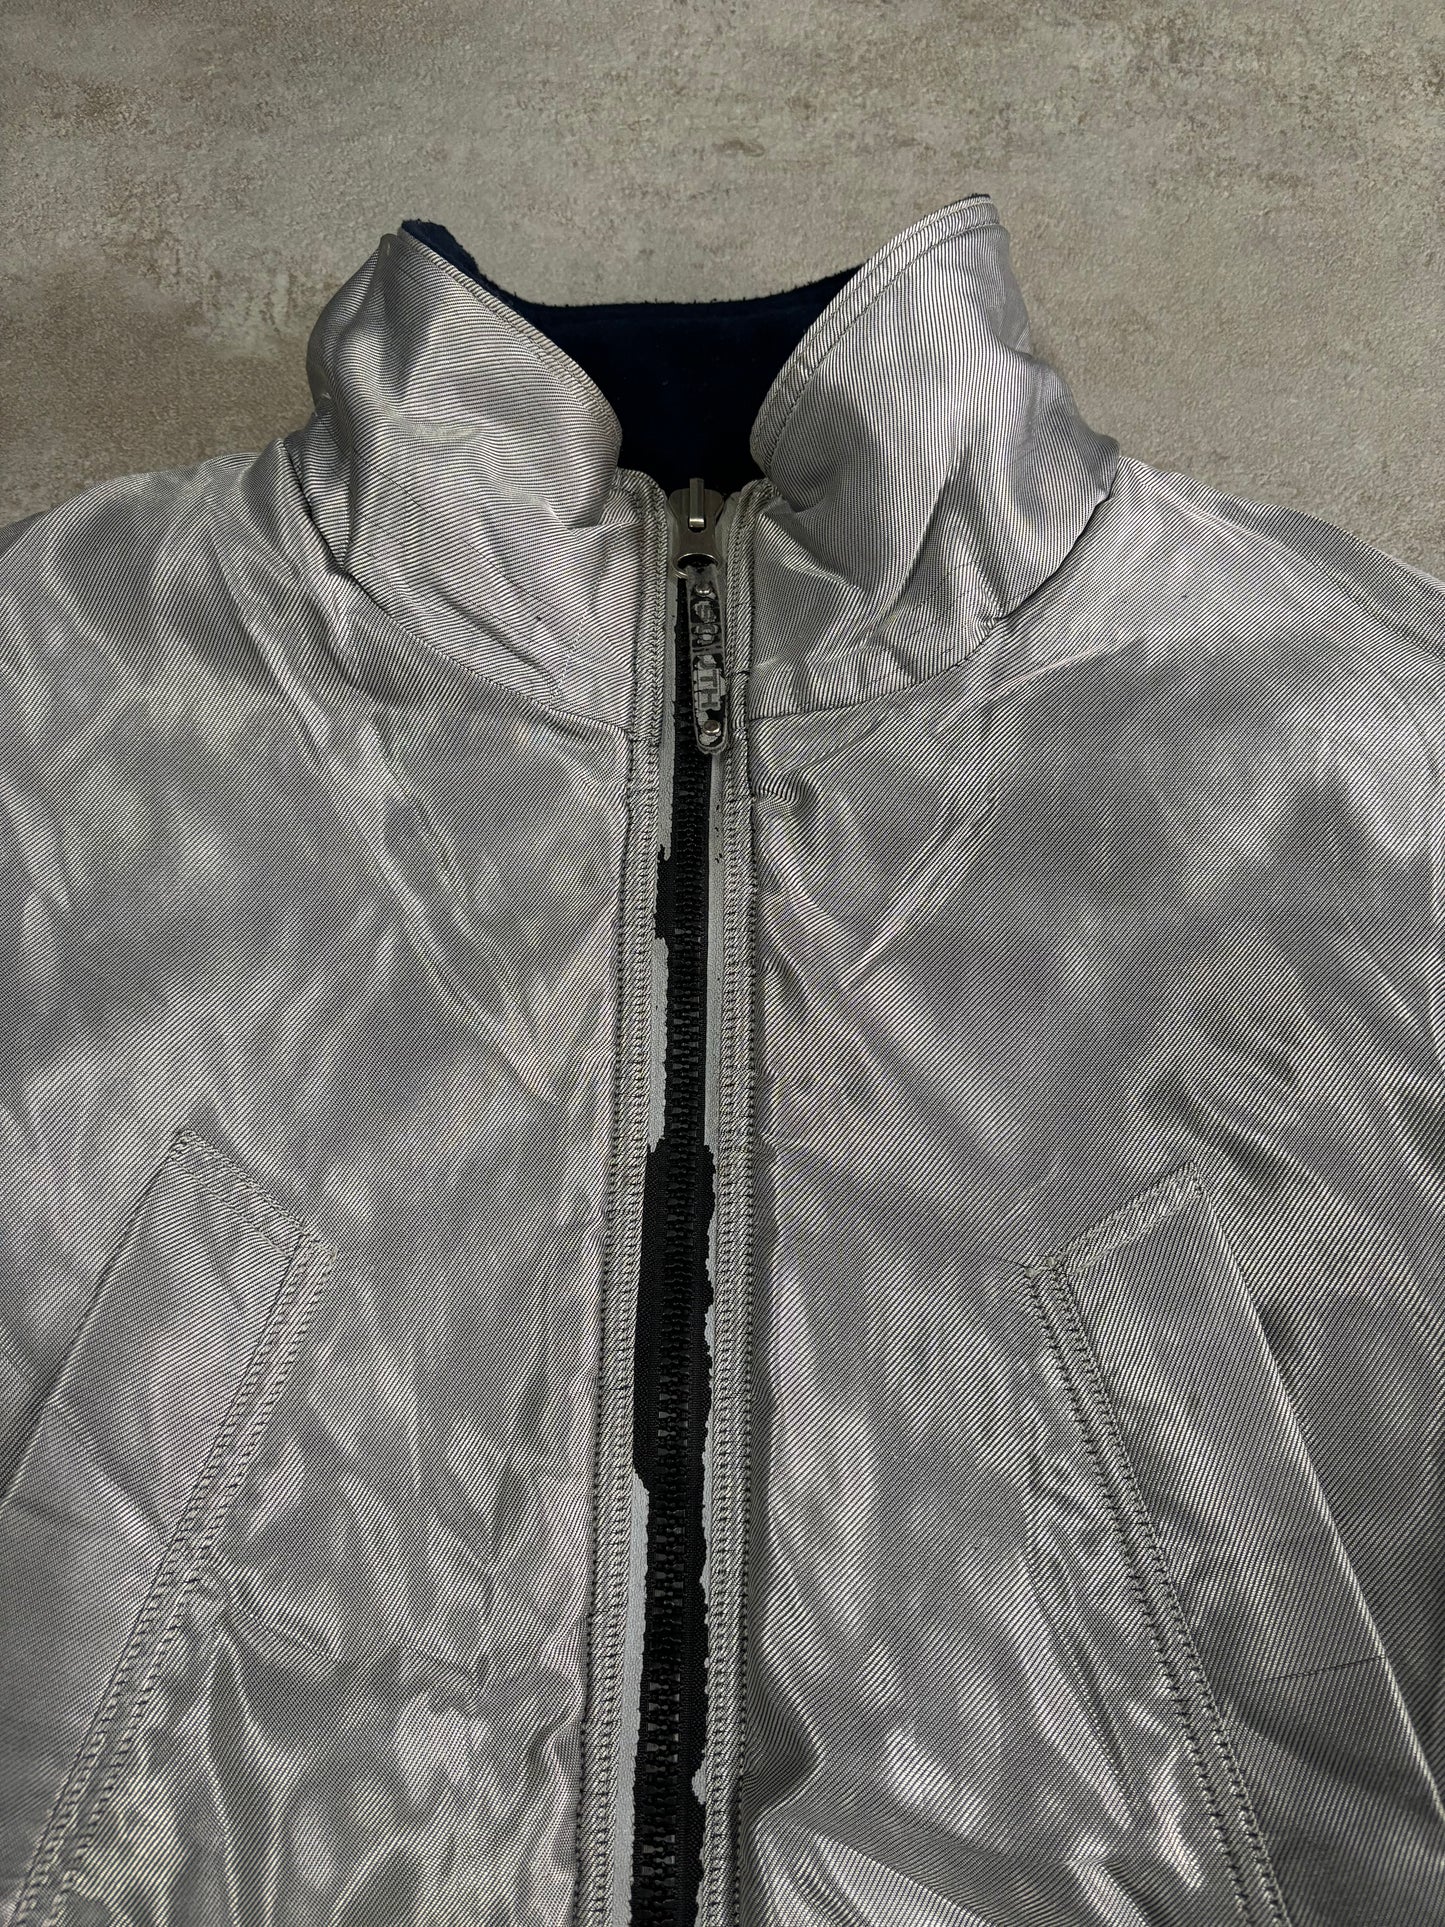 South Pole 90s Vintage Reversible Padded Jacket - XL